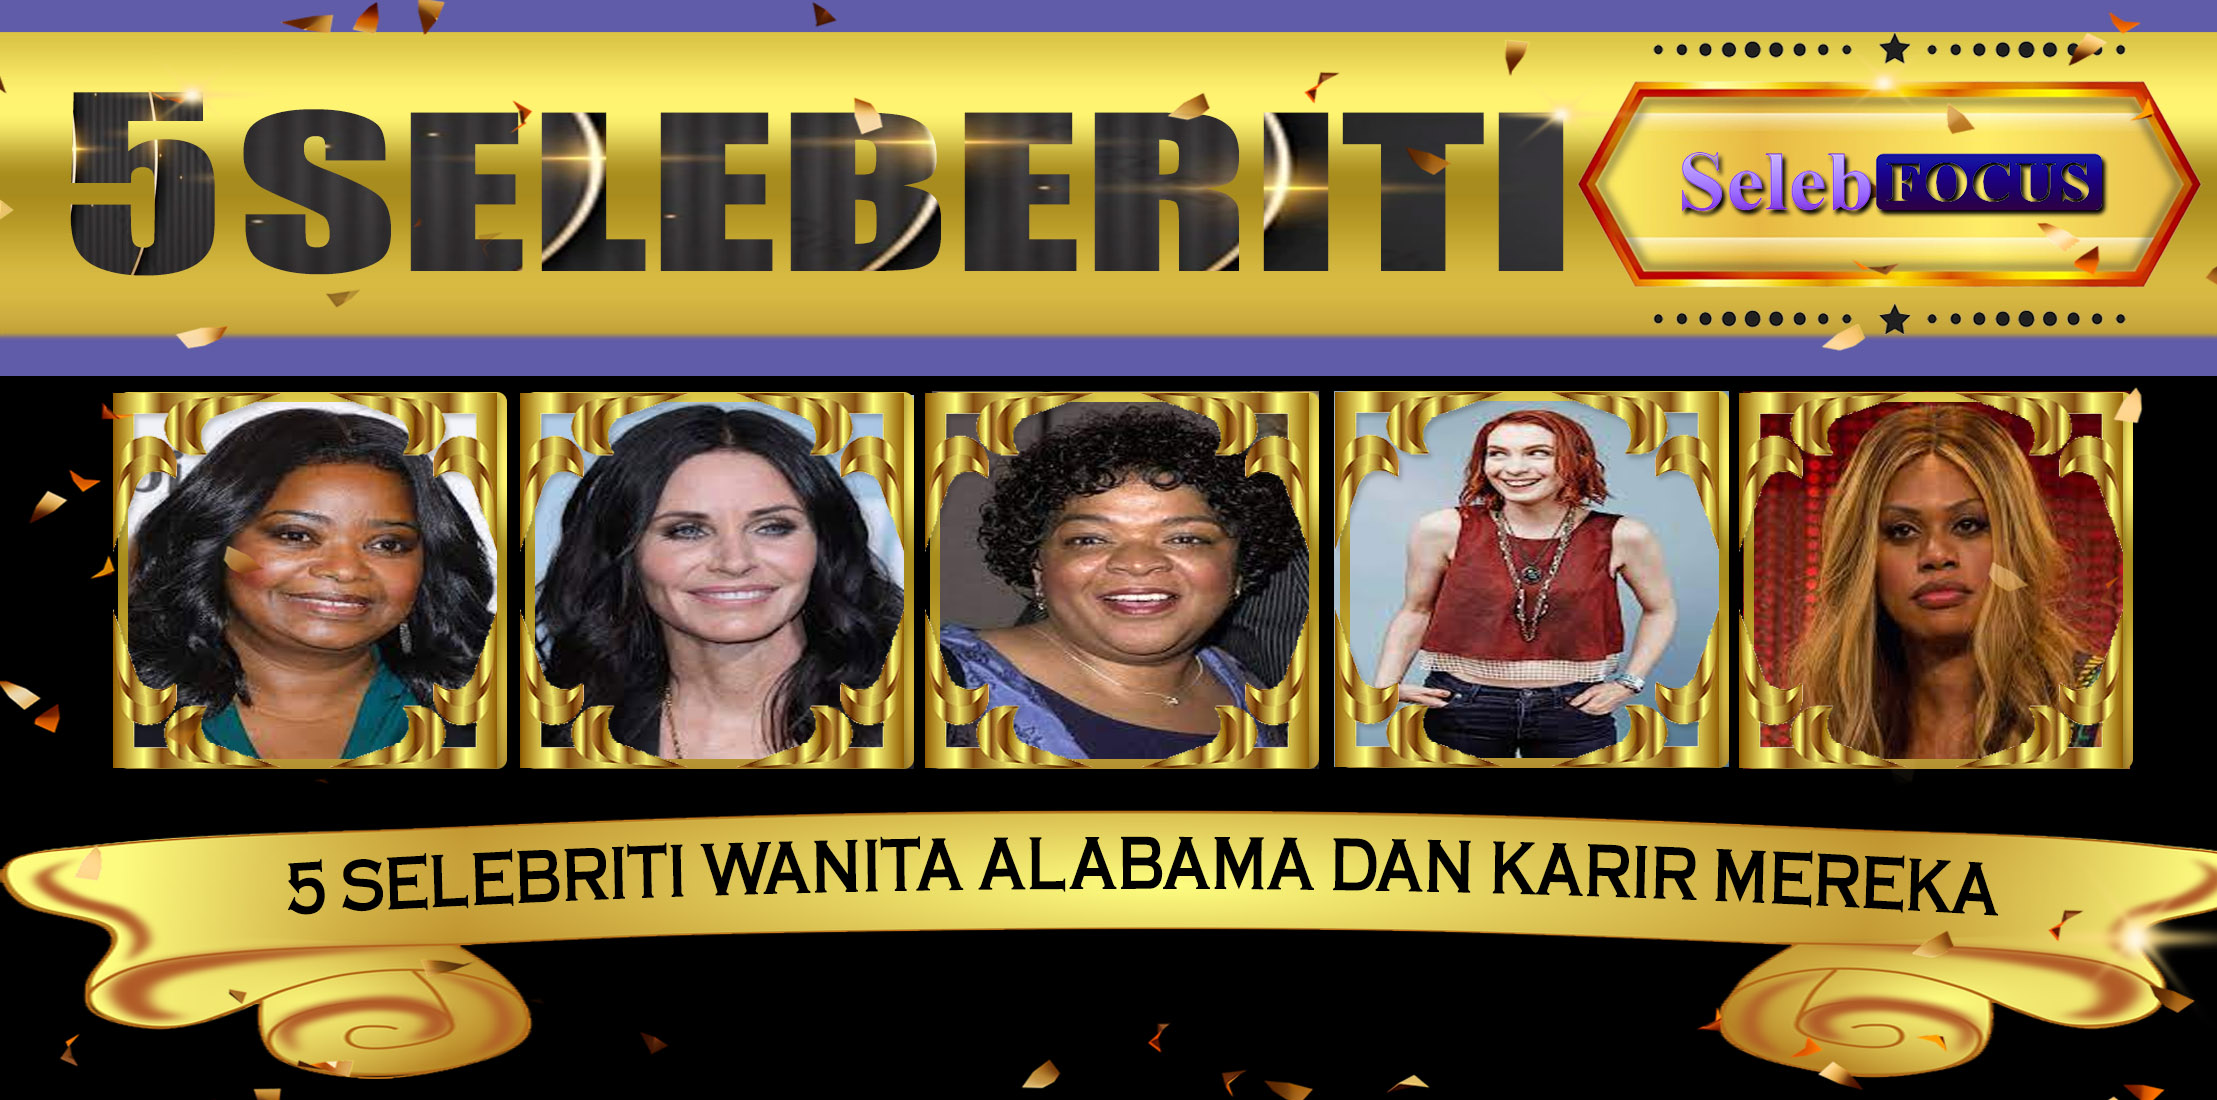 5 Selebriti Wanita Alabama